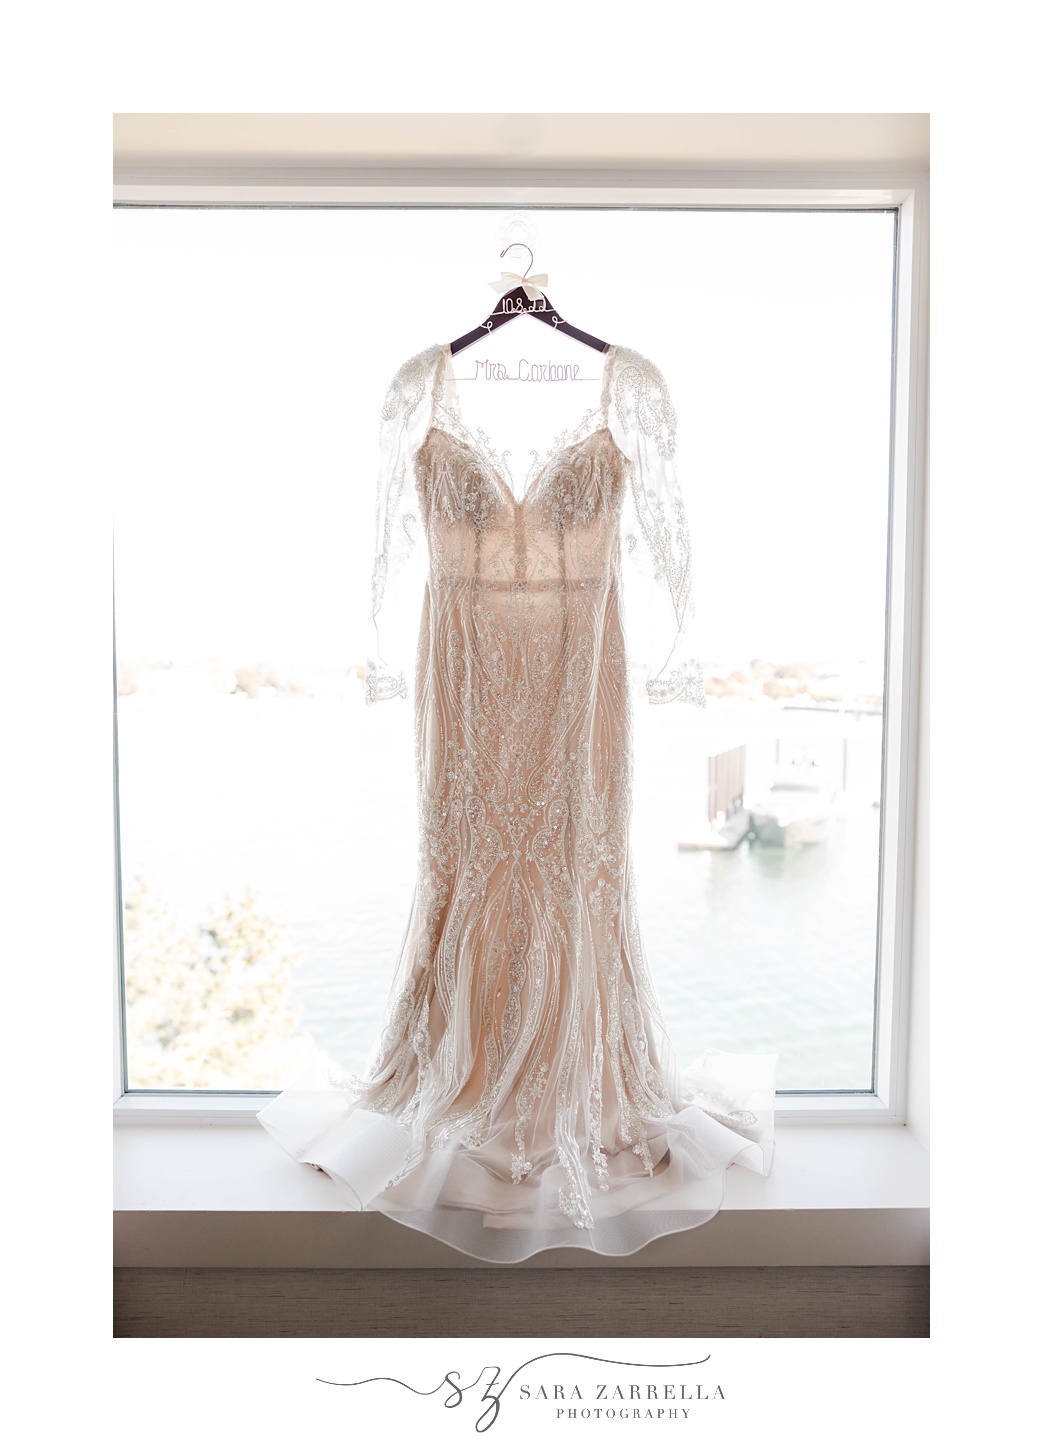 bride's wedding dress with lace sleeves hangs in window 